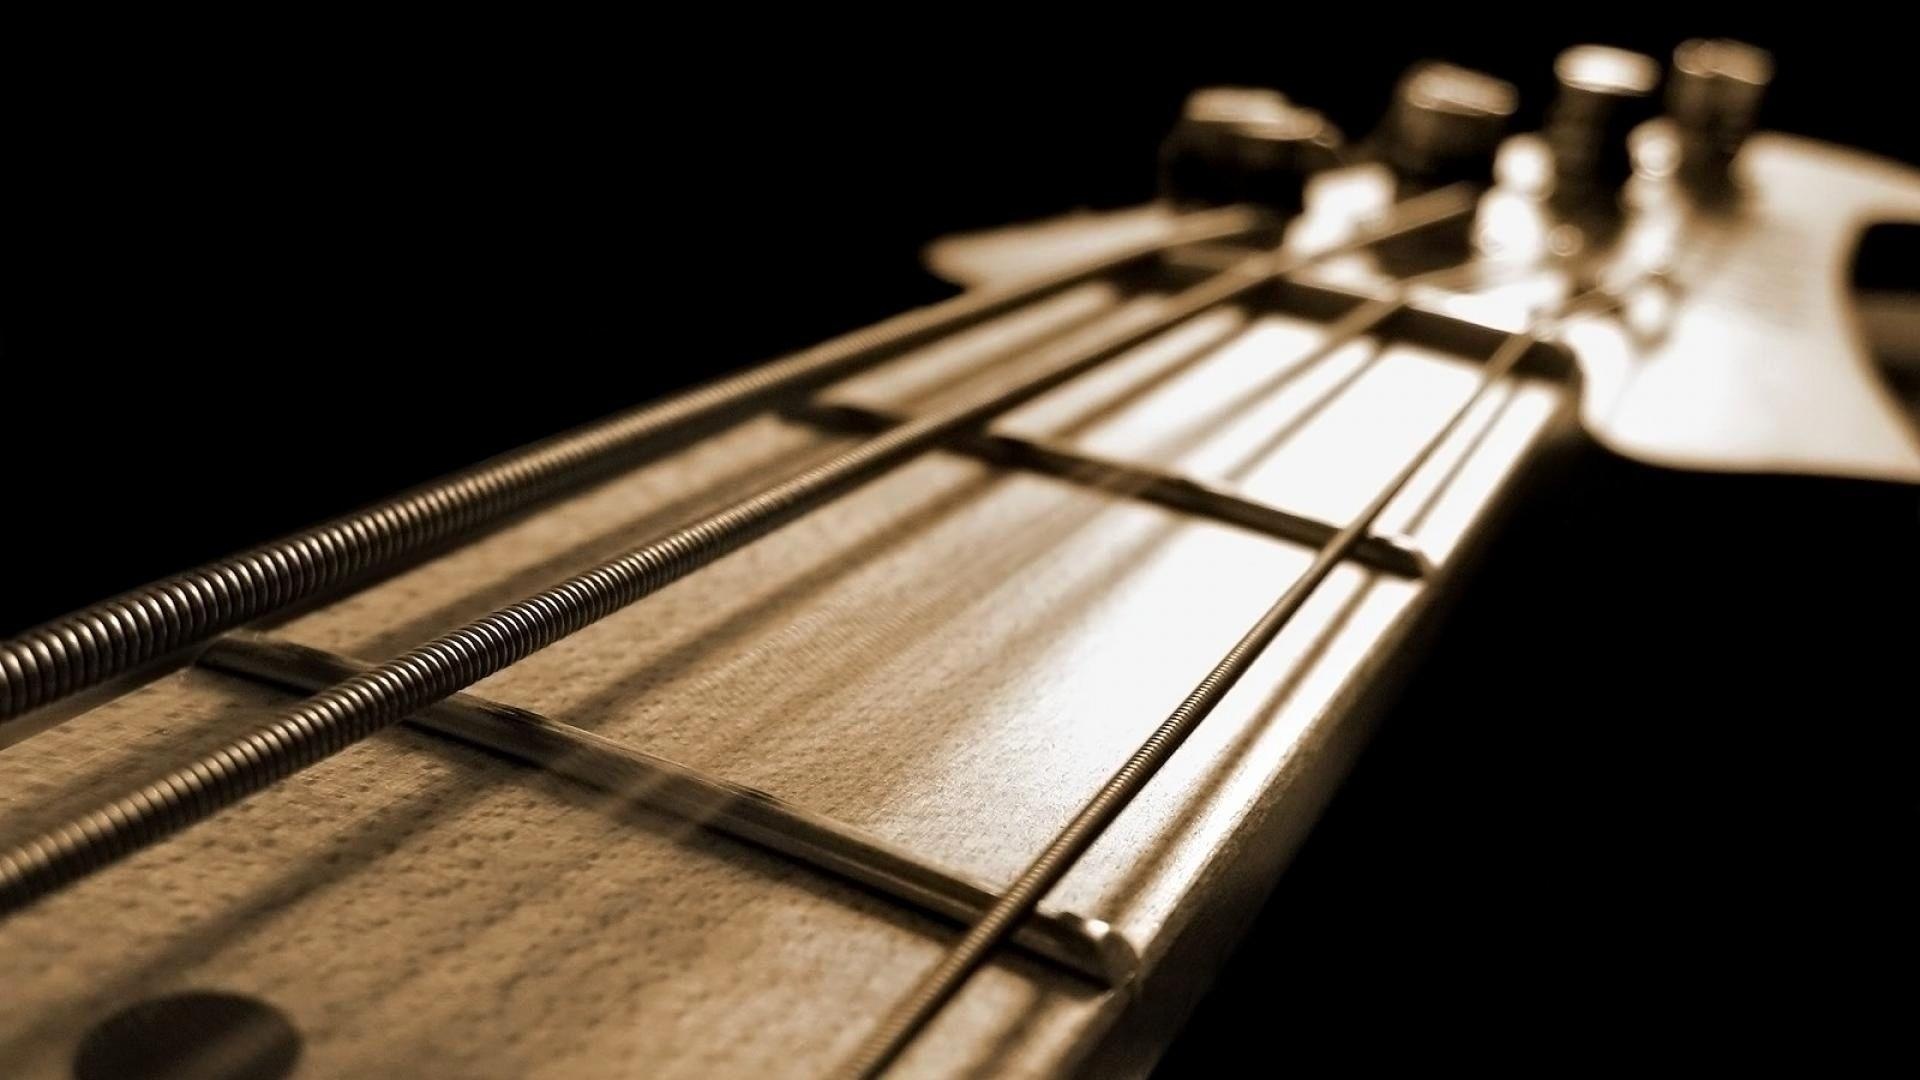 String Bass Guitar, Ibanez wallpapers, Musical elegance and power, 1920x1080 Full HD Desktop